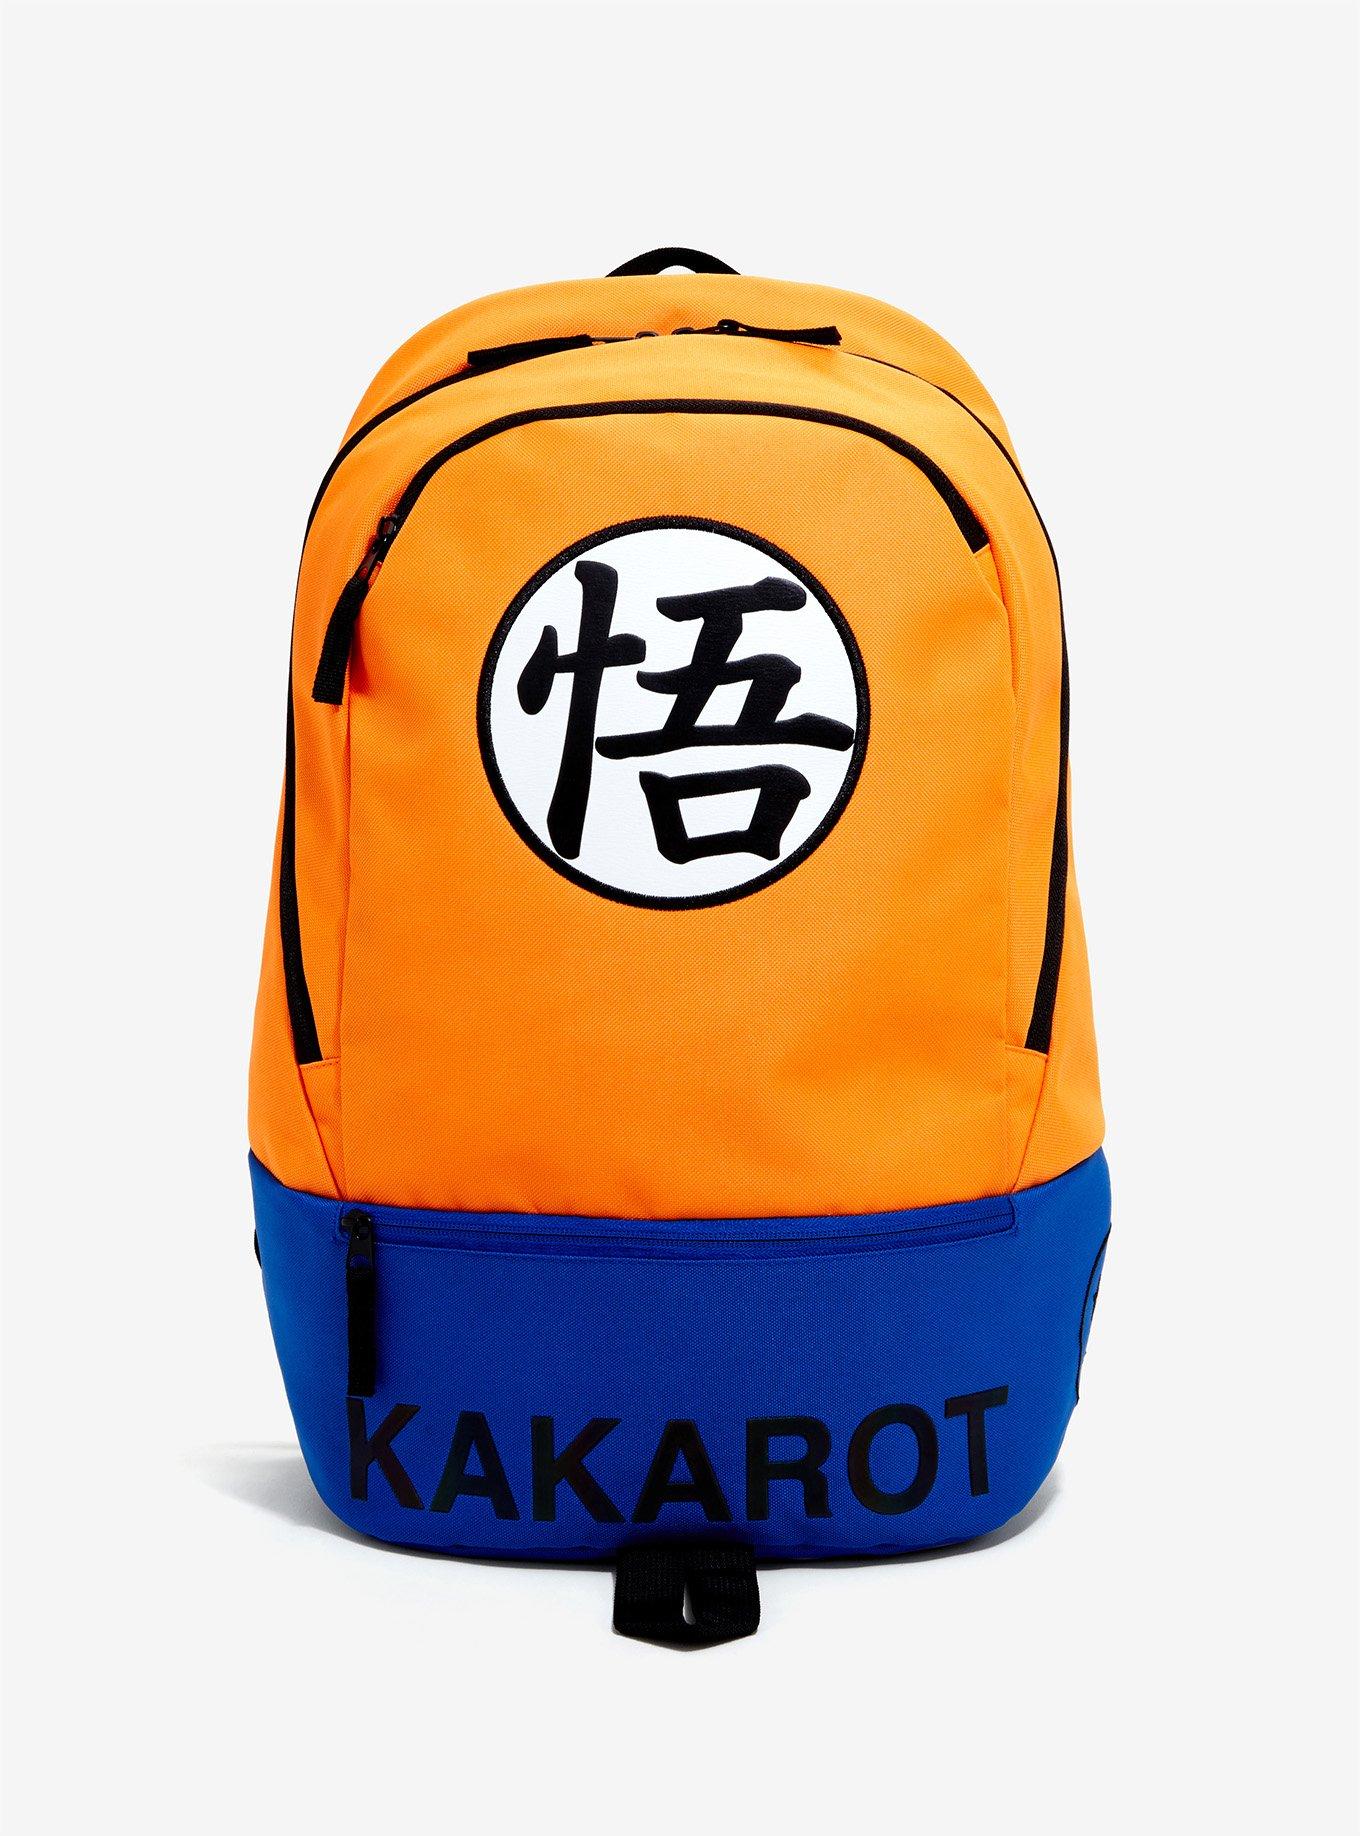 Dragon Ball Z Kanji Goku Logo Backpack Navy